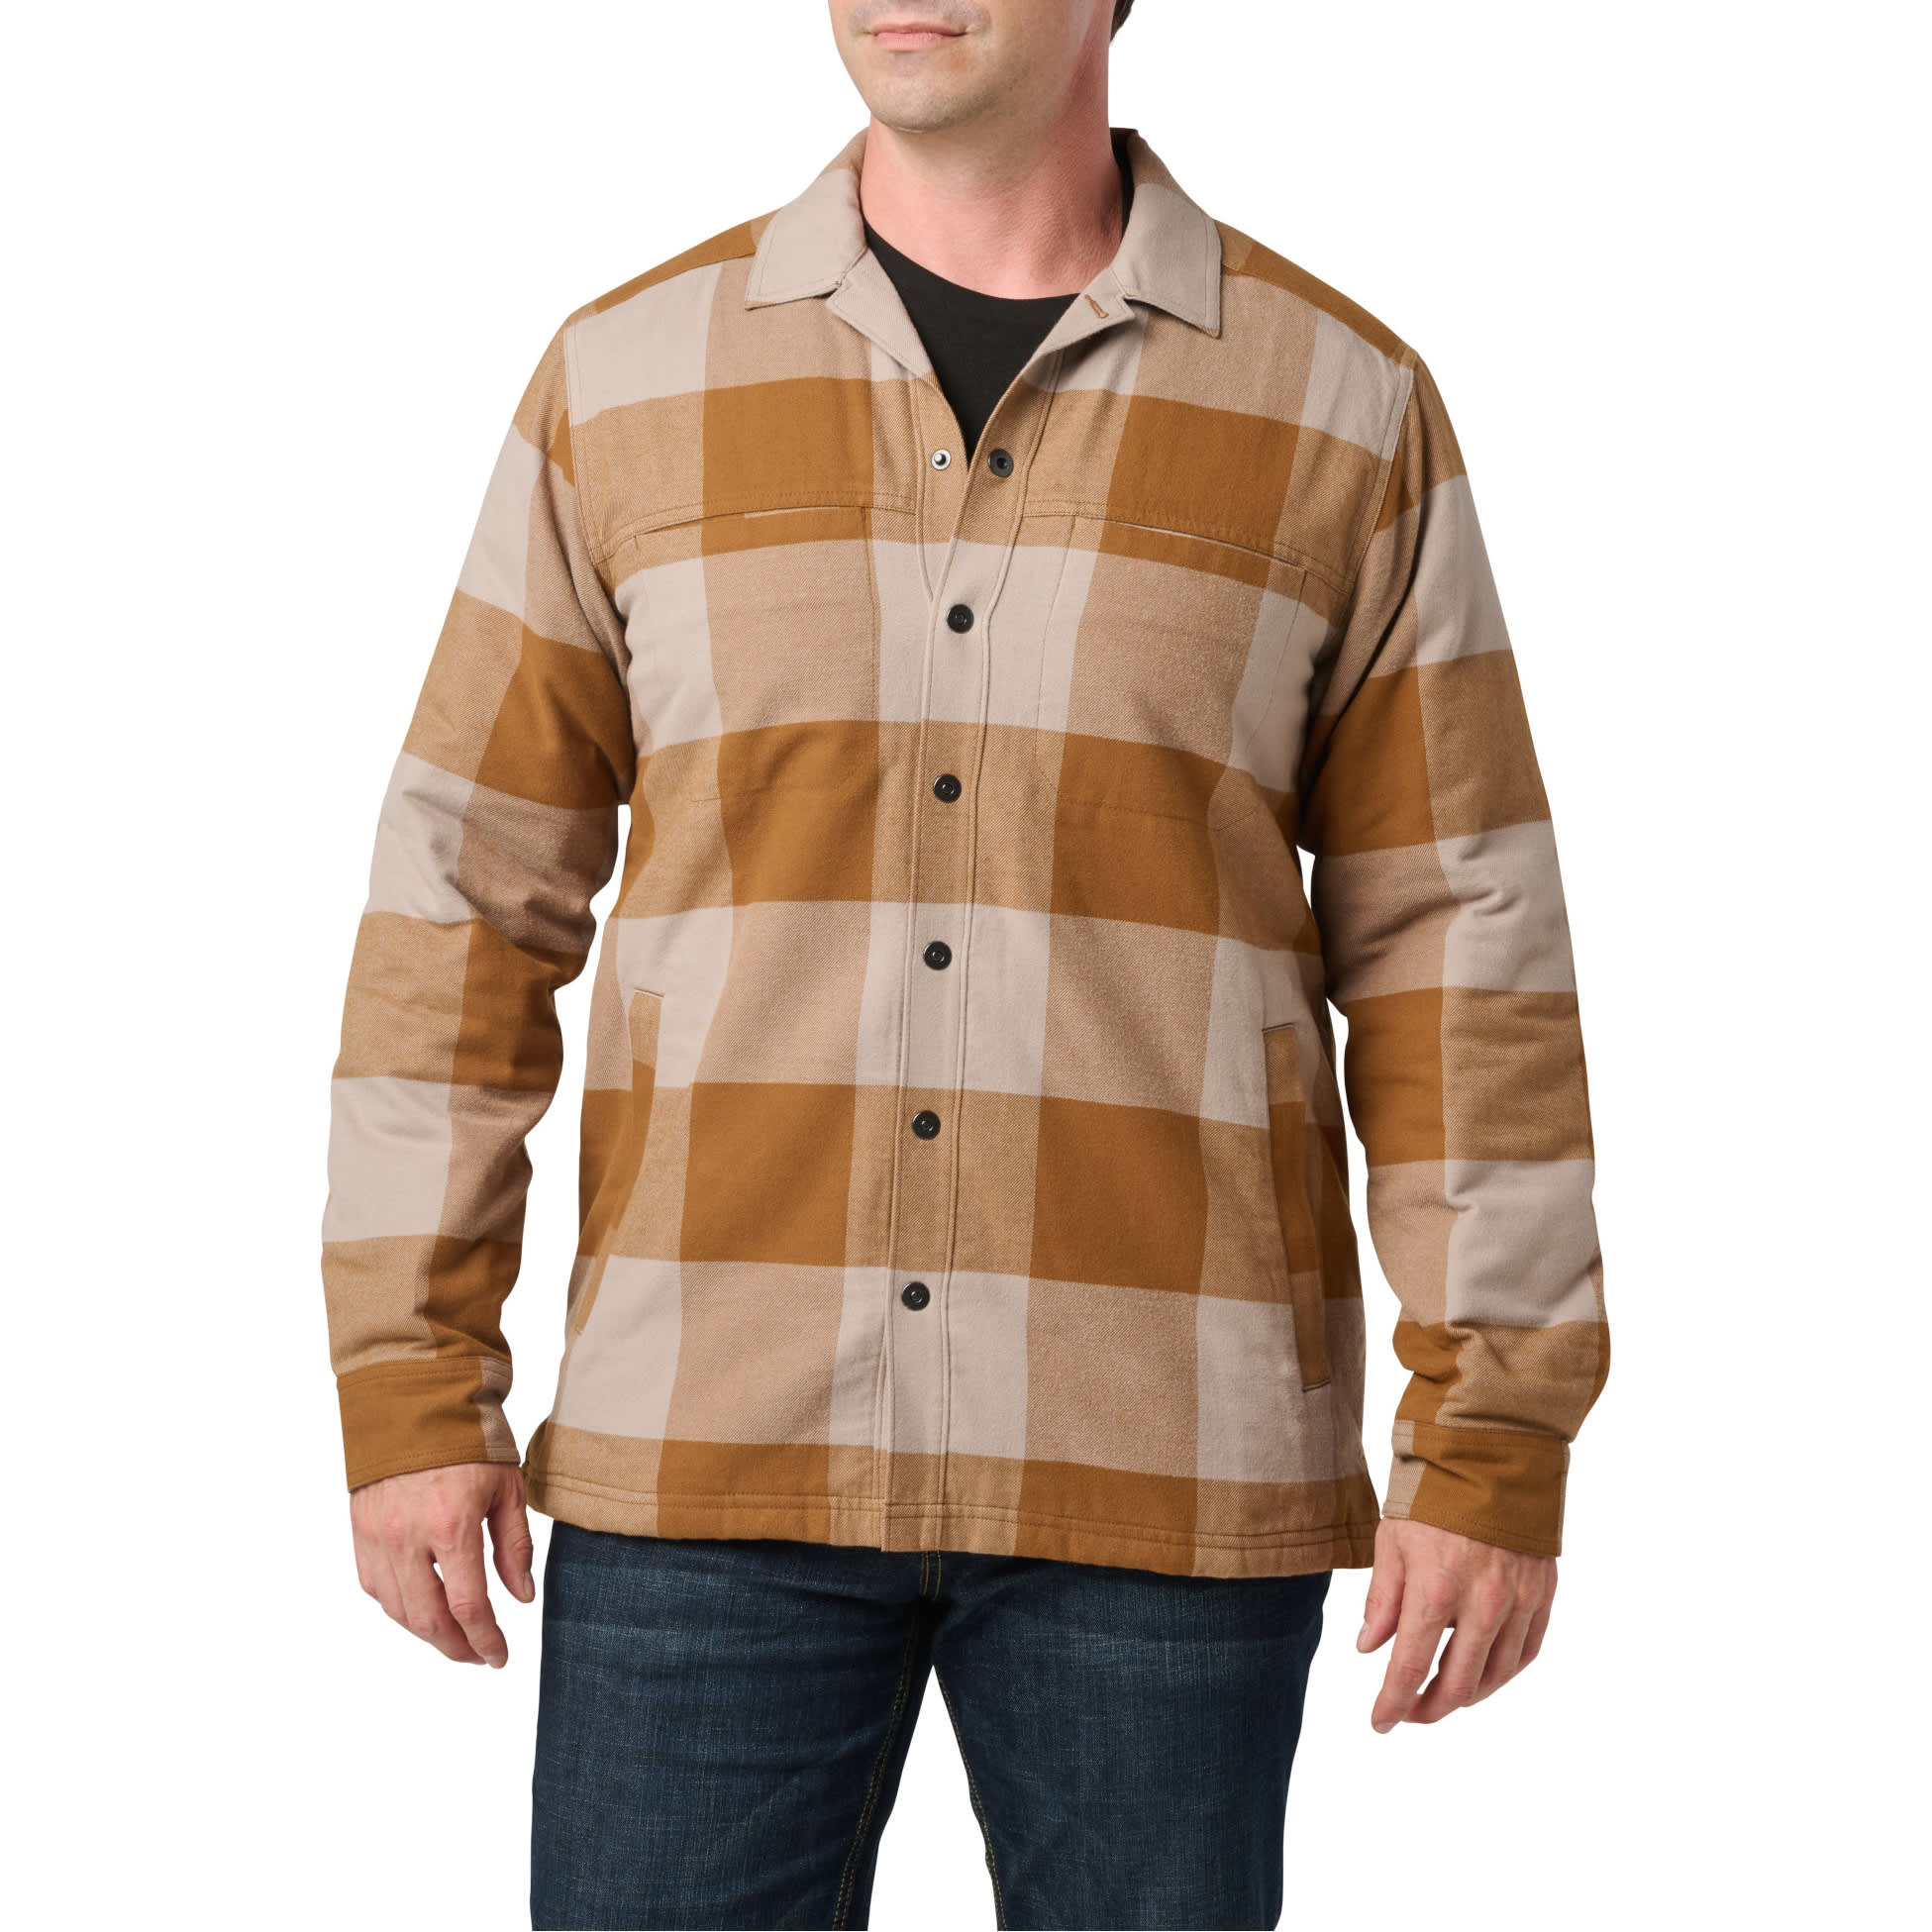 5.11® Men’s Seth Shirt Jacket